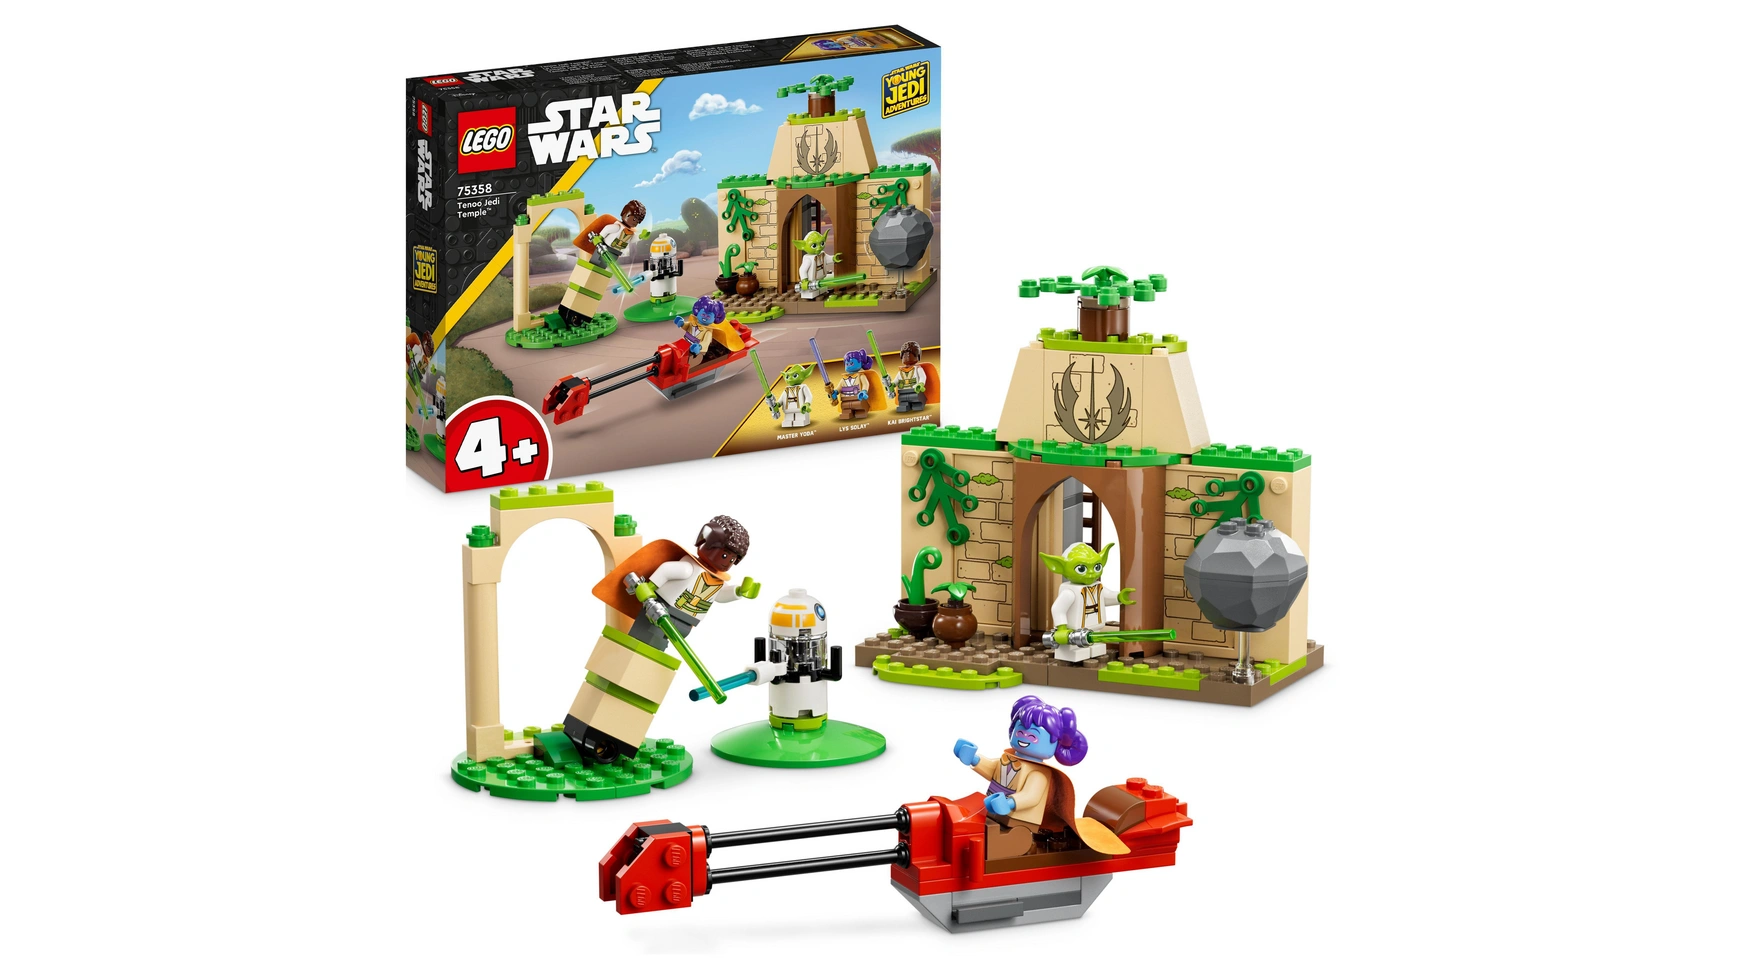 Lego Star Wars Набор Храм джедаев Тену 4+ с минифигурками